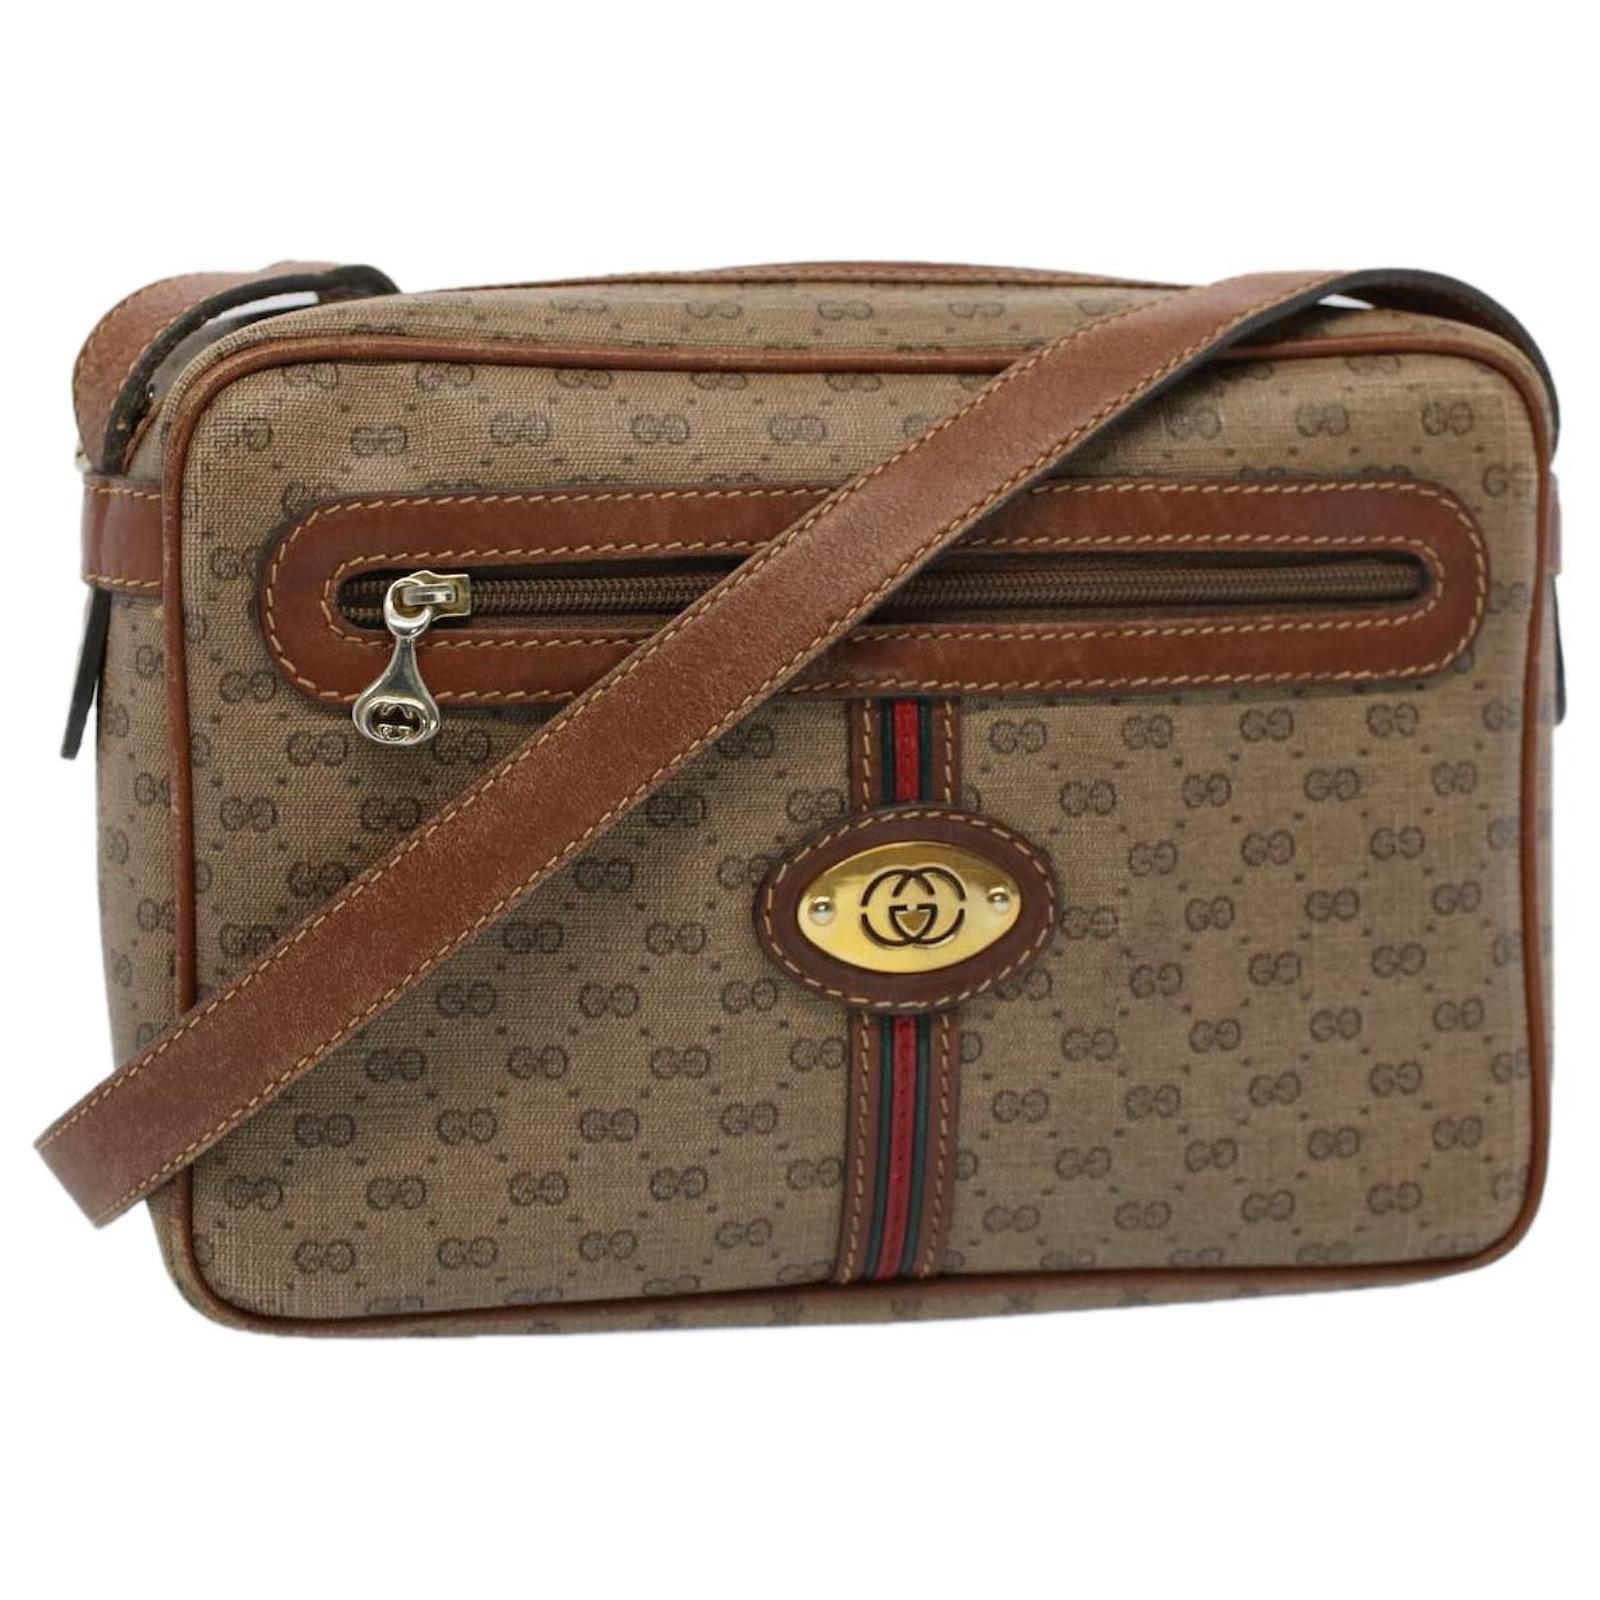 Gucci Small Soho Disco Bag Rose Beige Patent Leather crossbody purse | eBay